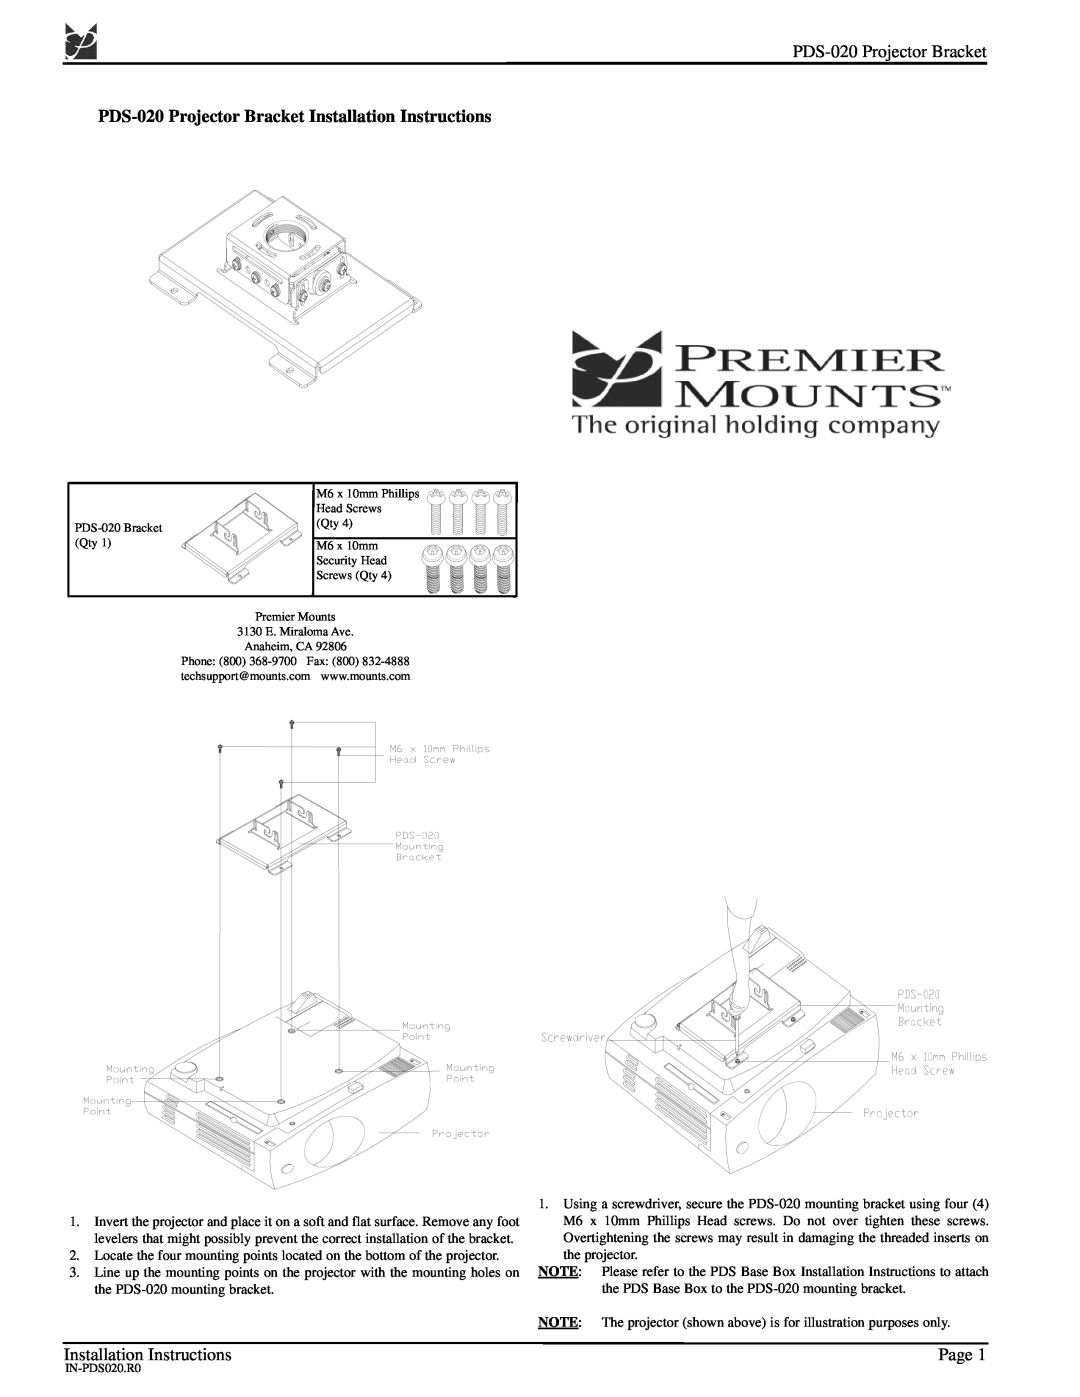 Premier Mounts installation instructions PDS-020Projector Bracket, Installation Instructions, Page 